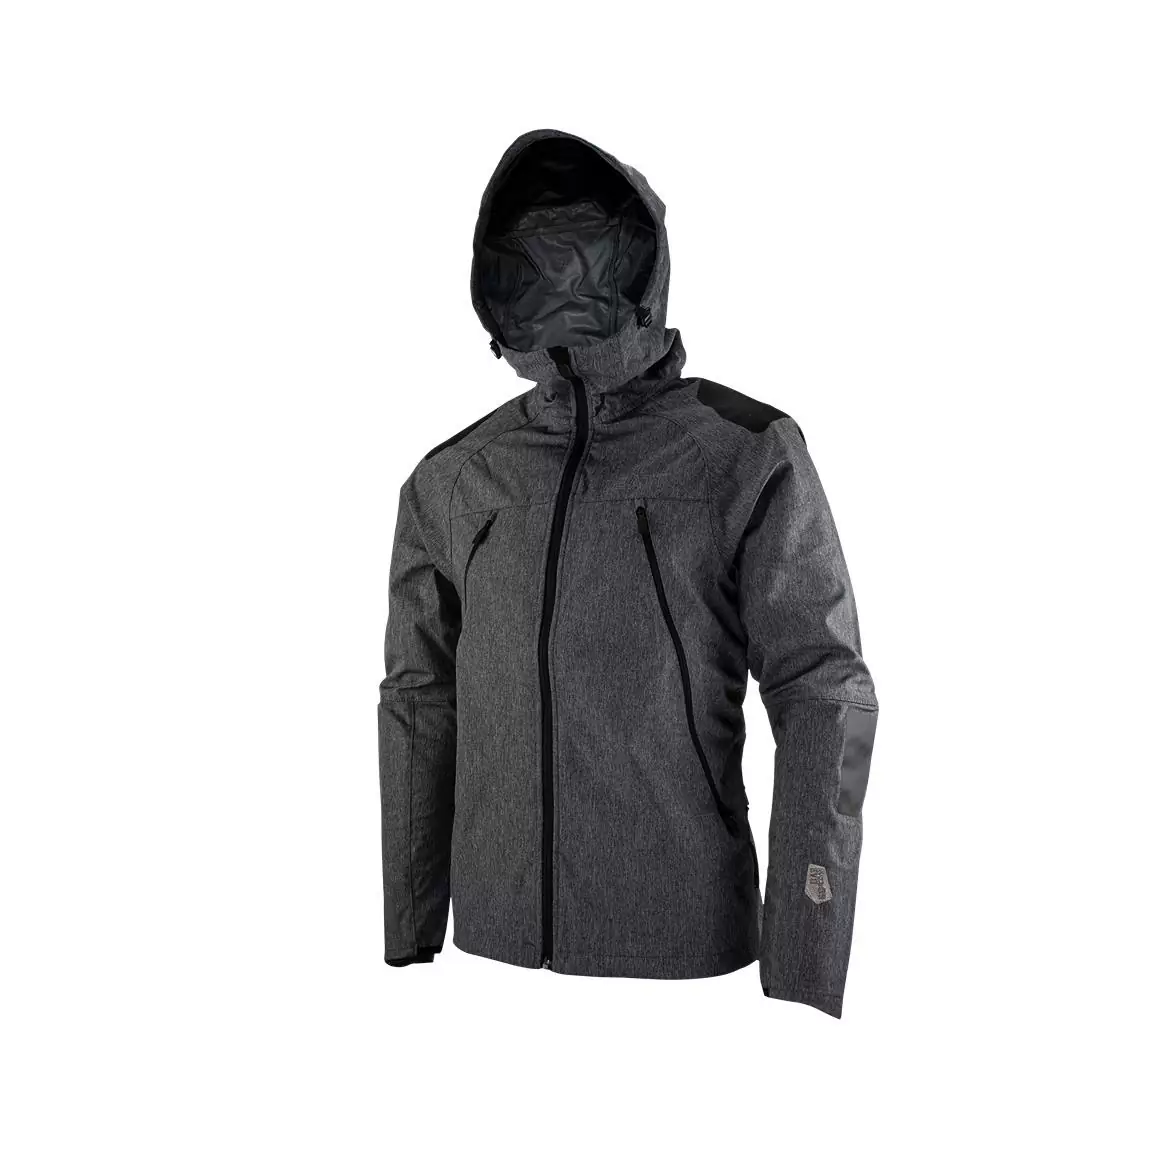 Mtb Hydradri 4.0 waterproof jacket Black size S #2